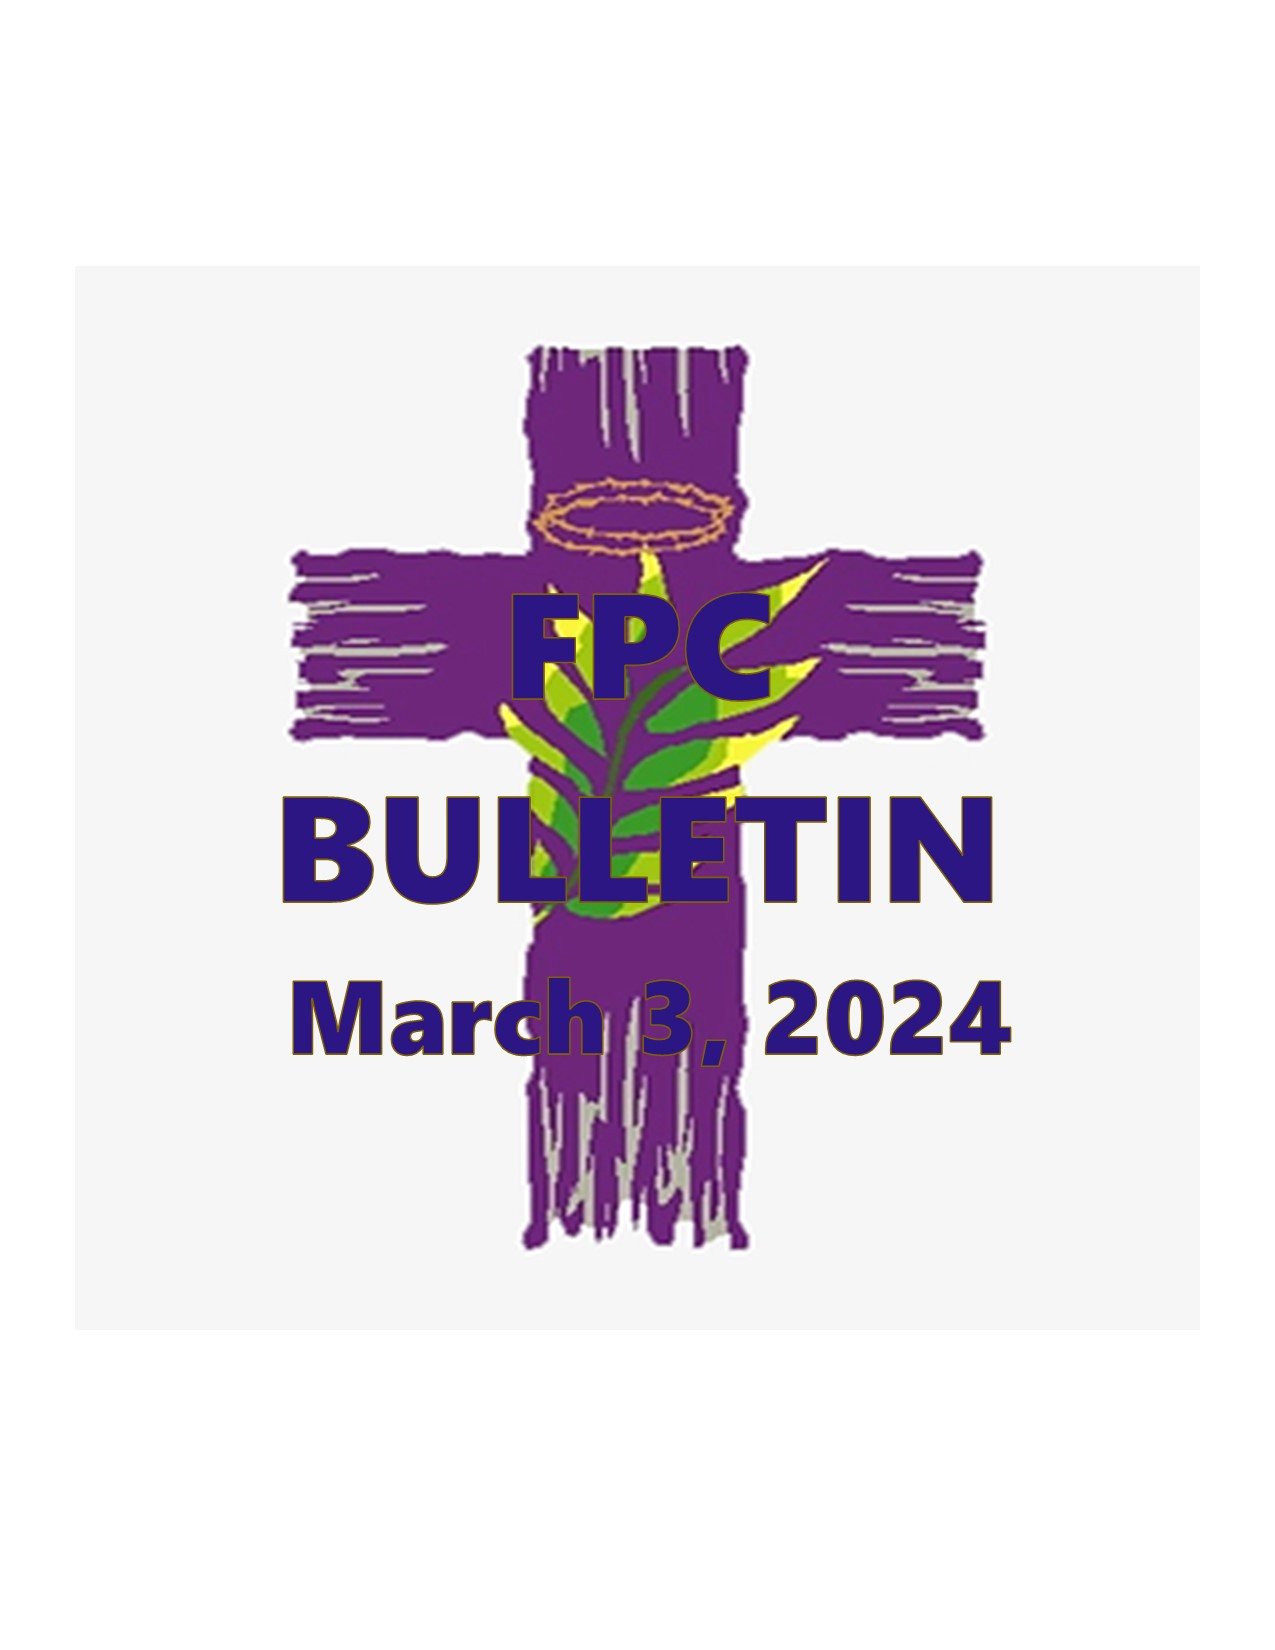 a Button - Bulletin March 3 2024.jpg